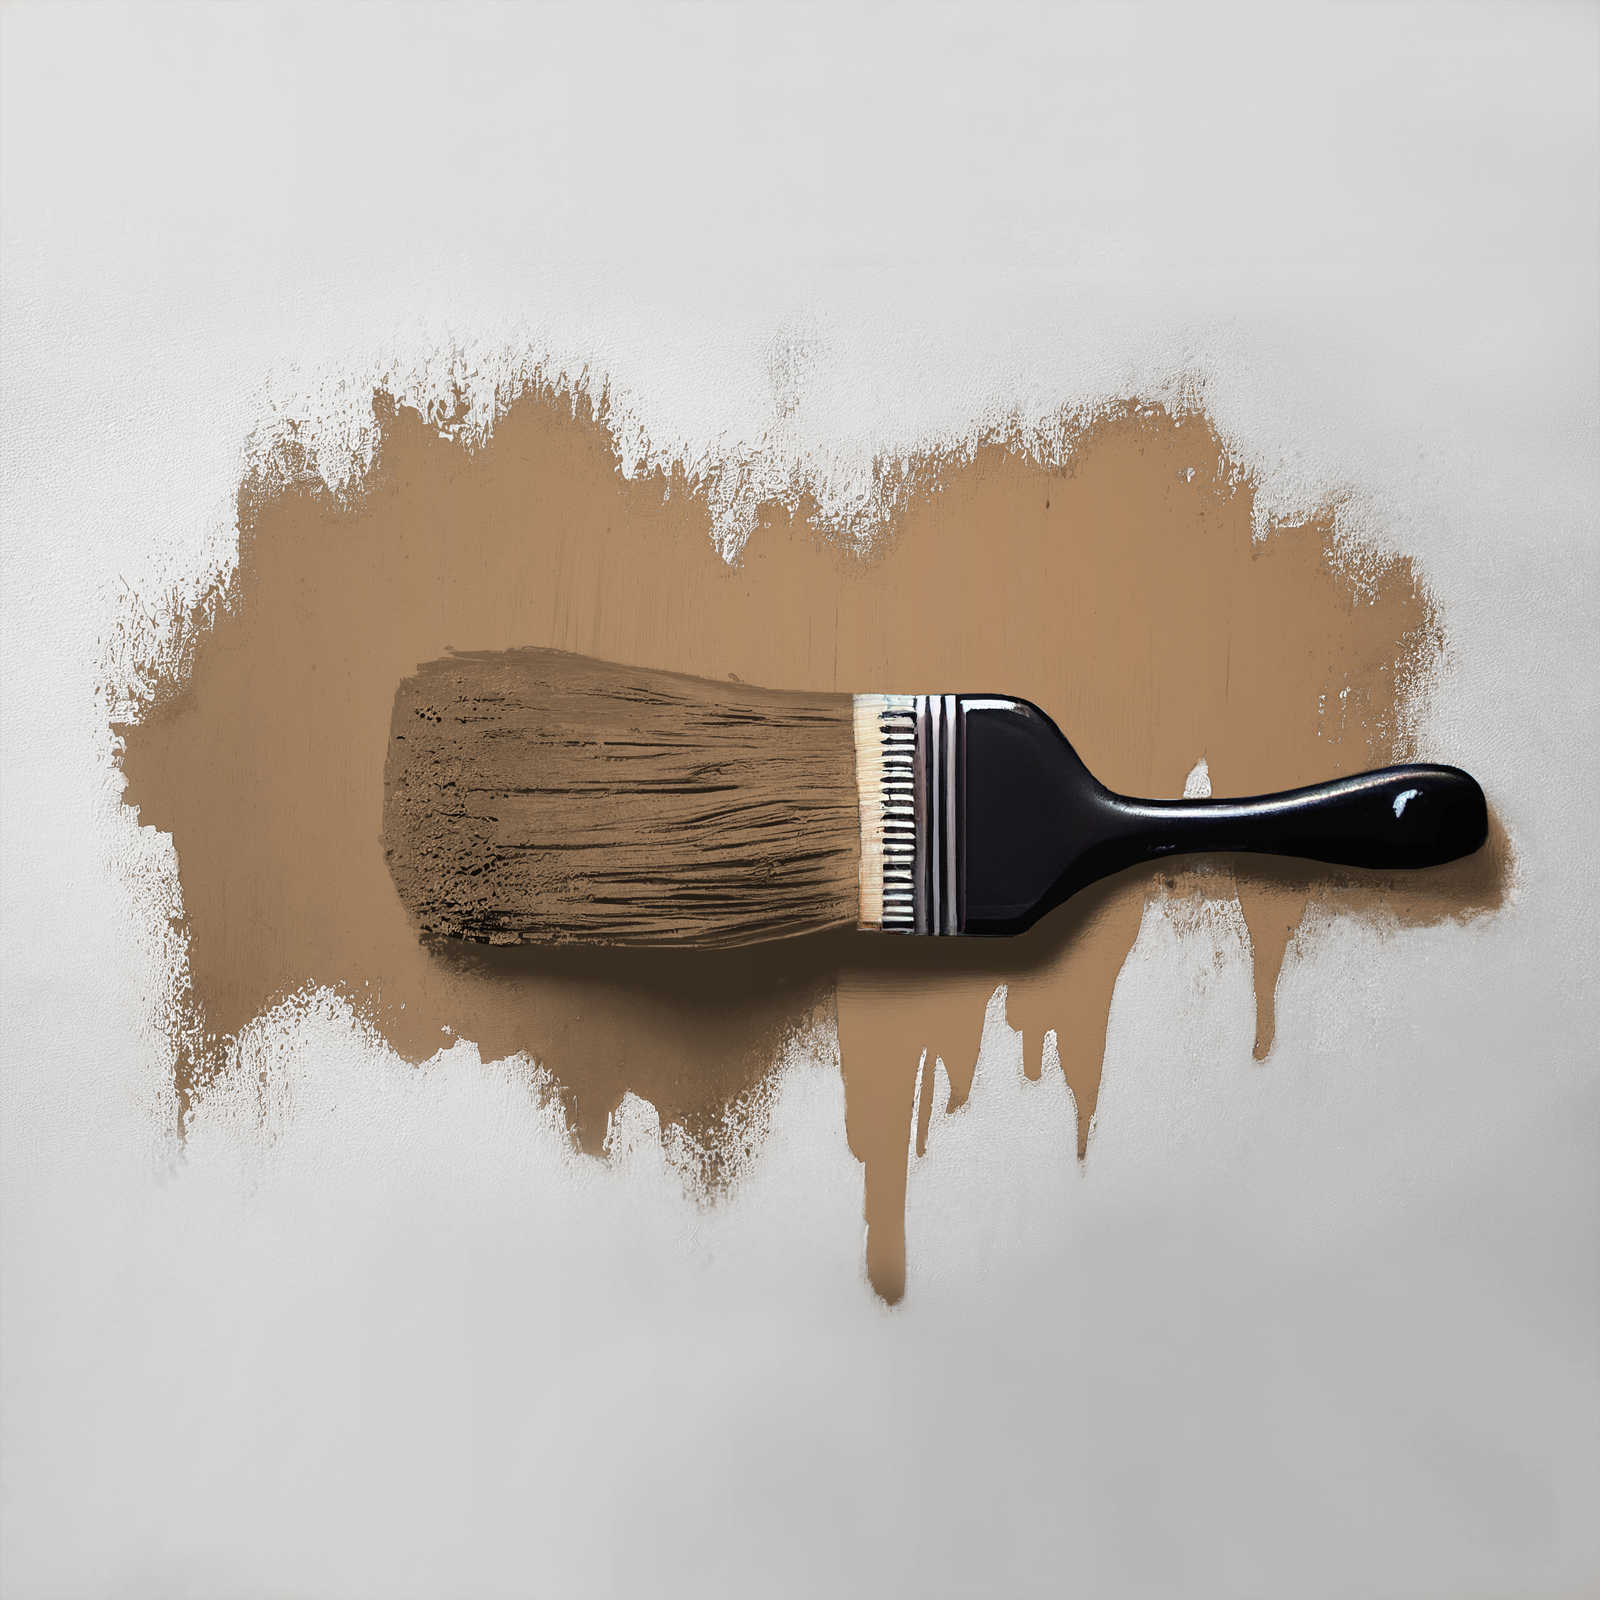             Wall Paint TCK6006 »Certain Cinnamon« in strong golden brown – 2.5 litre
        